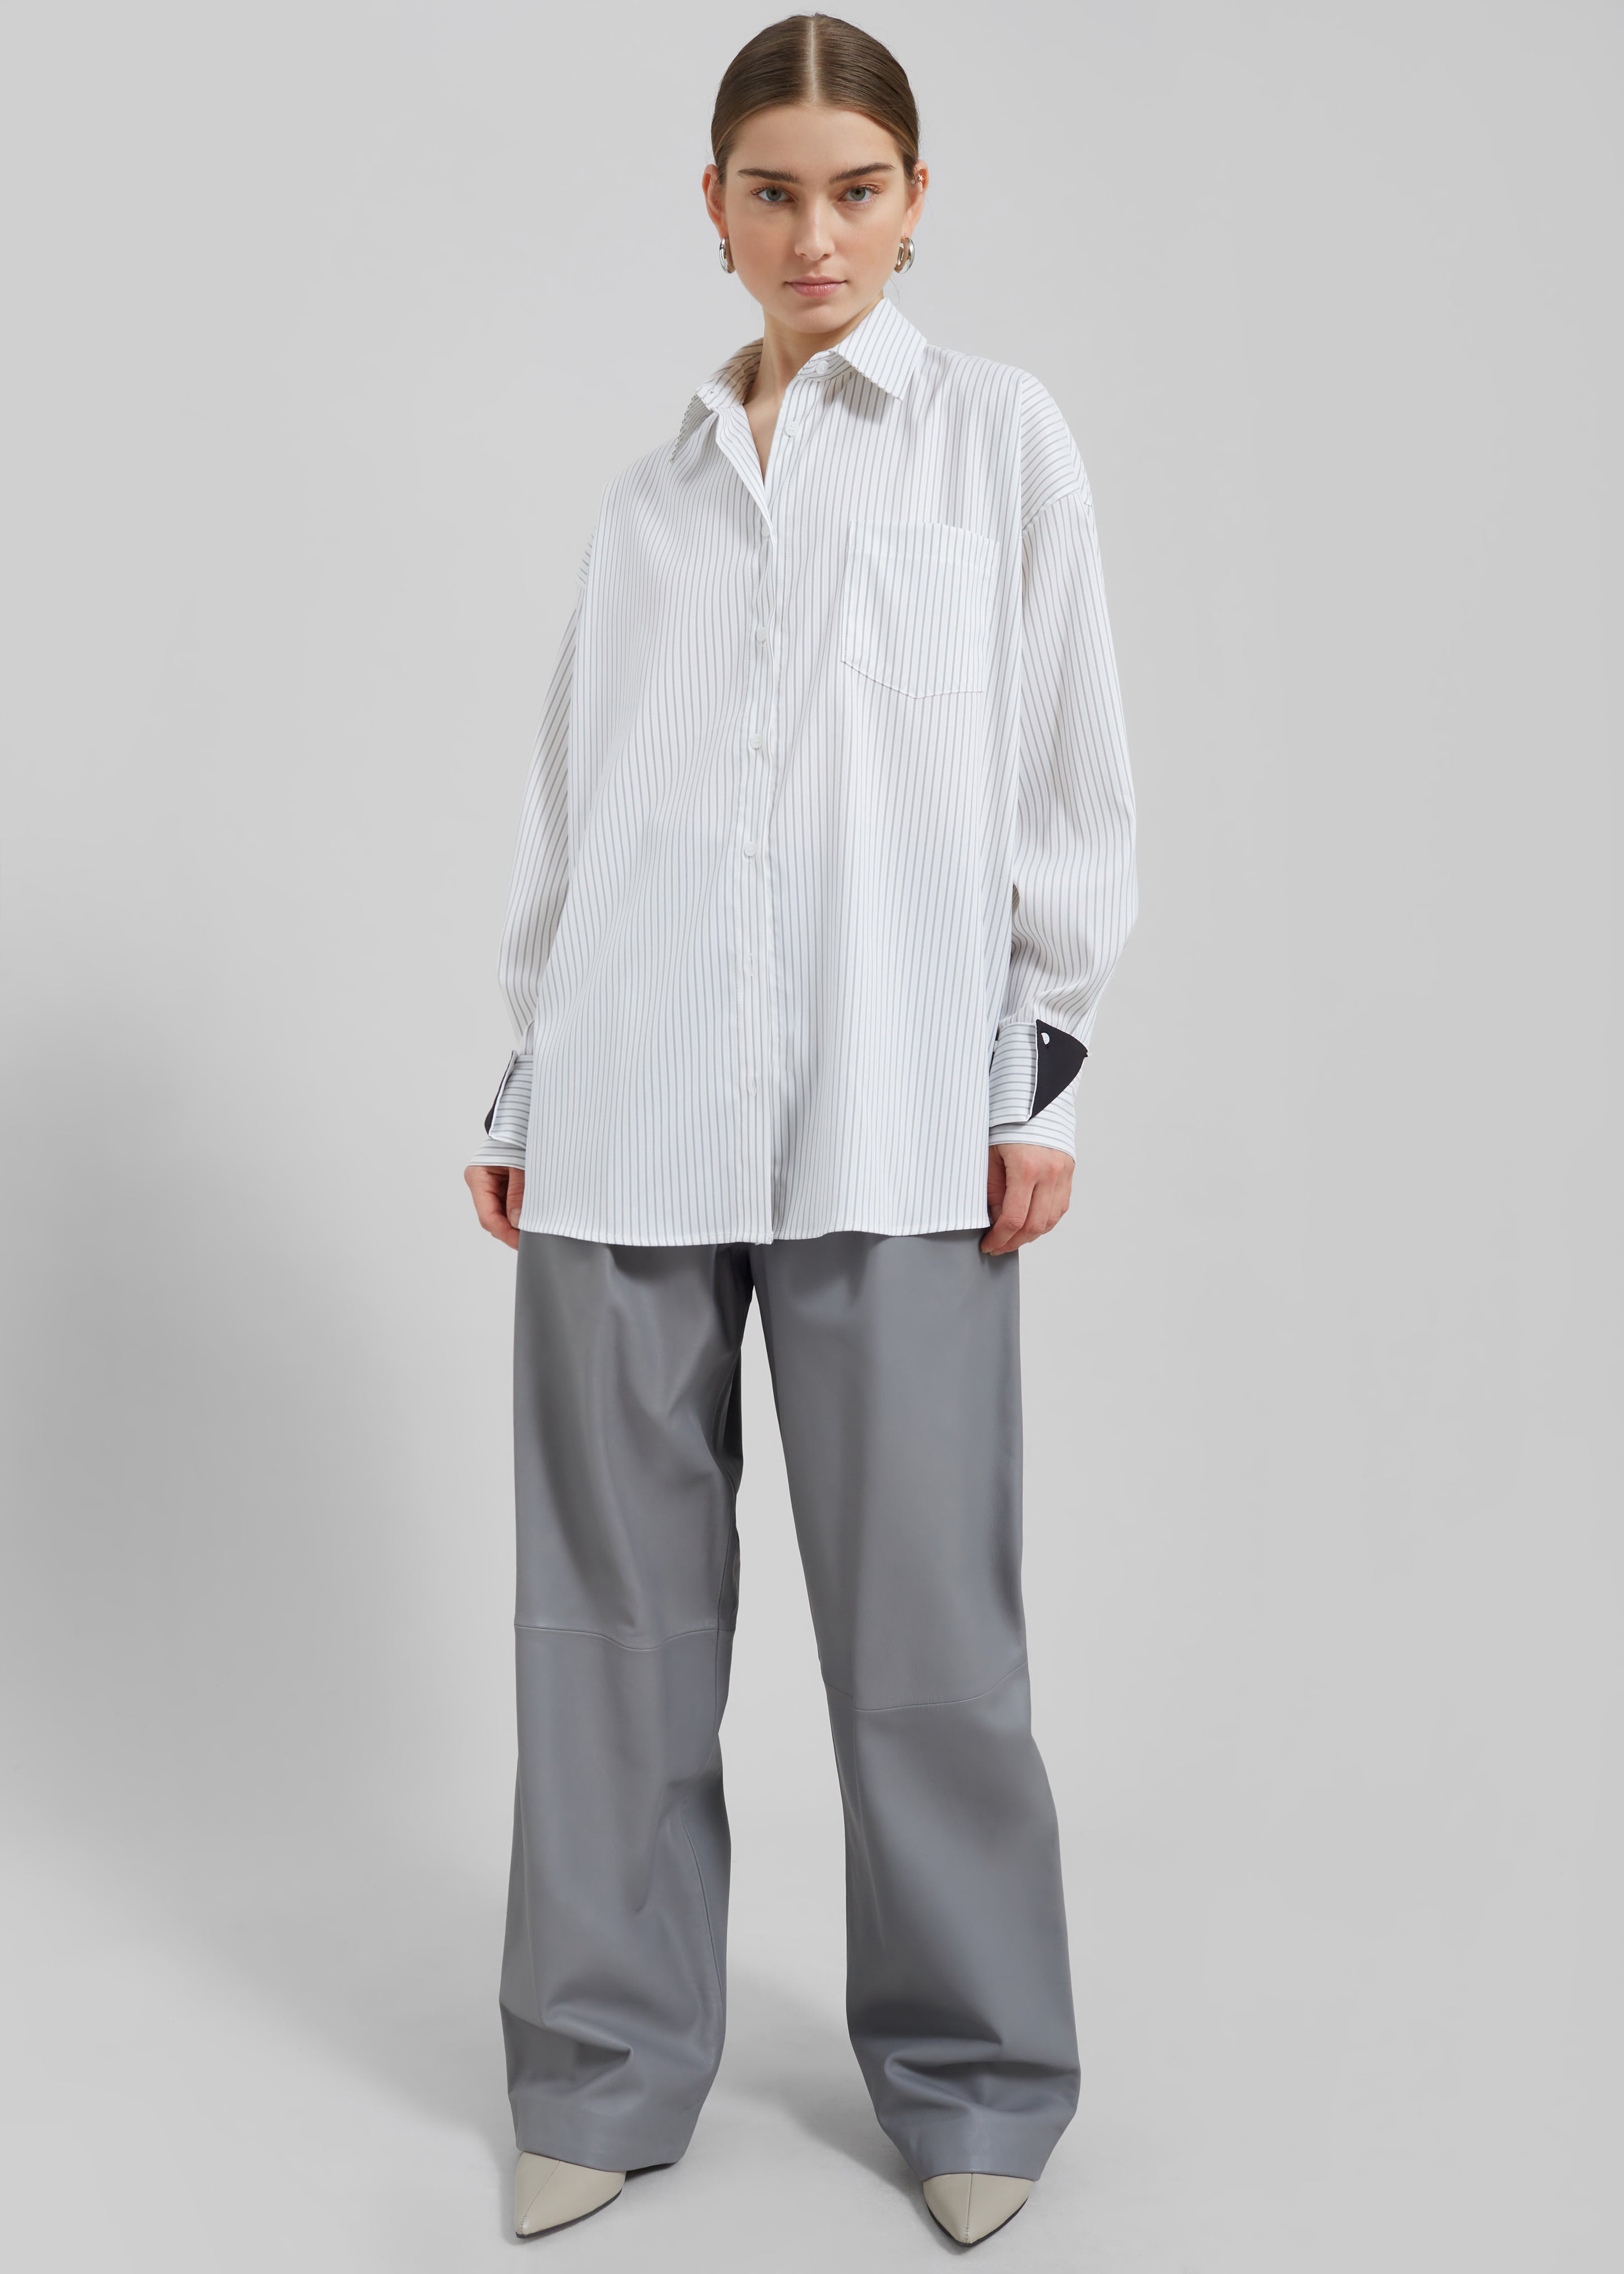 Leona Button Up Shirt - White/Grey Stripe - 1